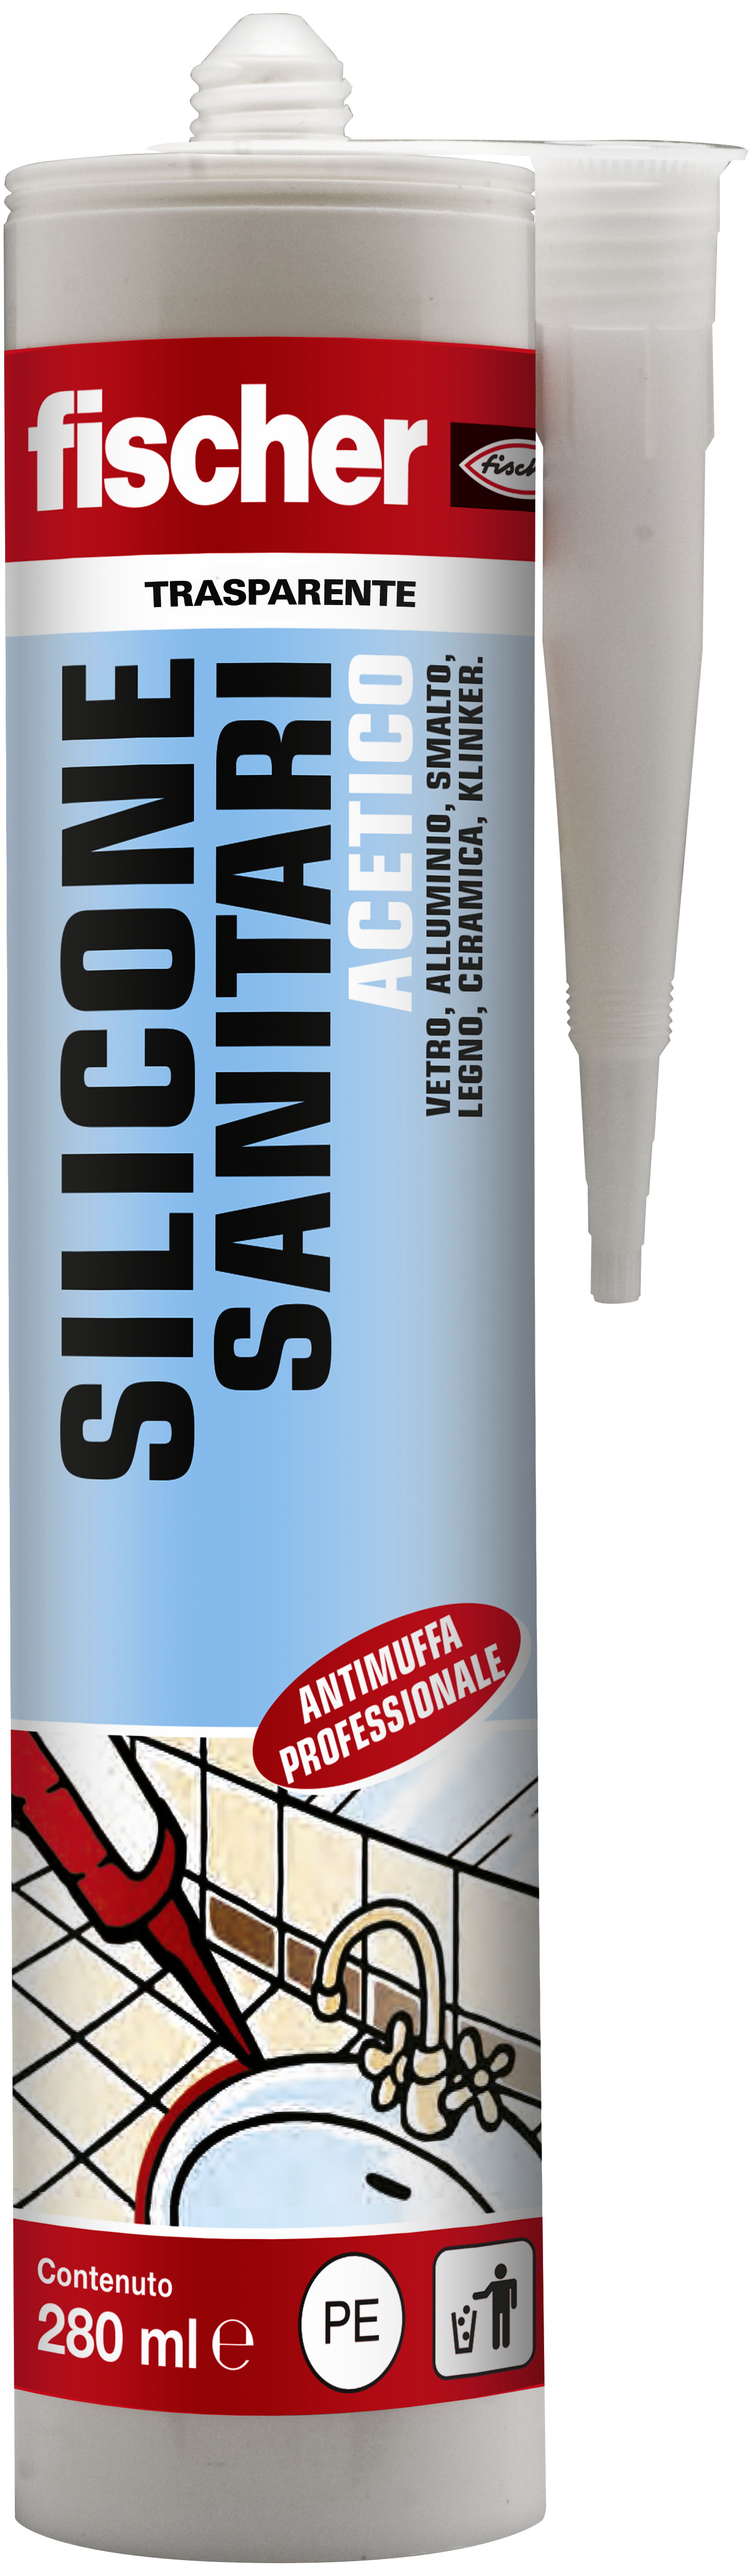 fischer Sigillante acetico sanitari SAS 280 TR - Trasparente (1 Pz.) Sigillante siliconico a base acetica per l'impiego in ambienti sanitari.